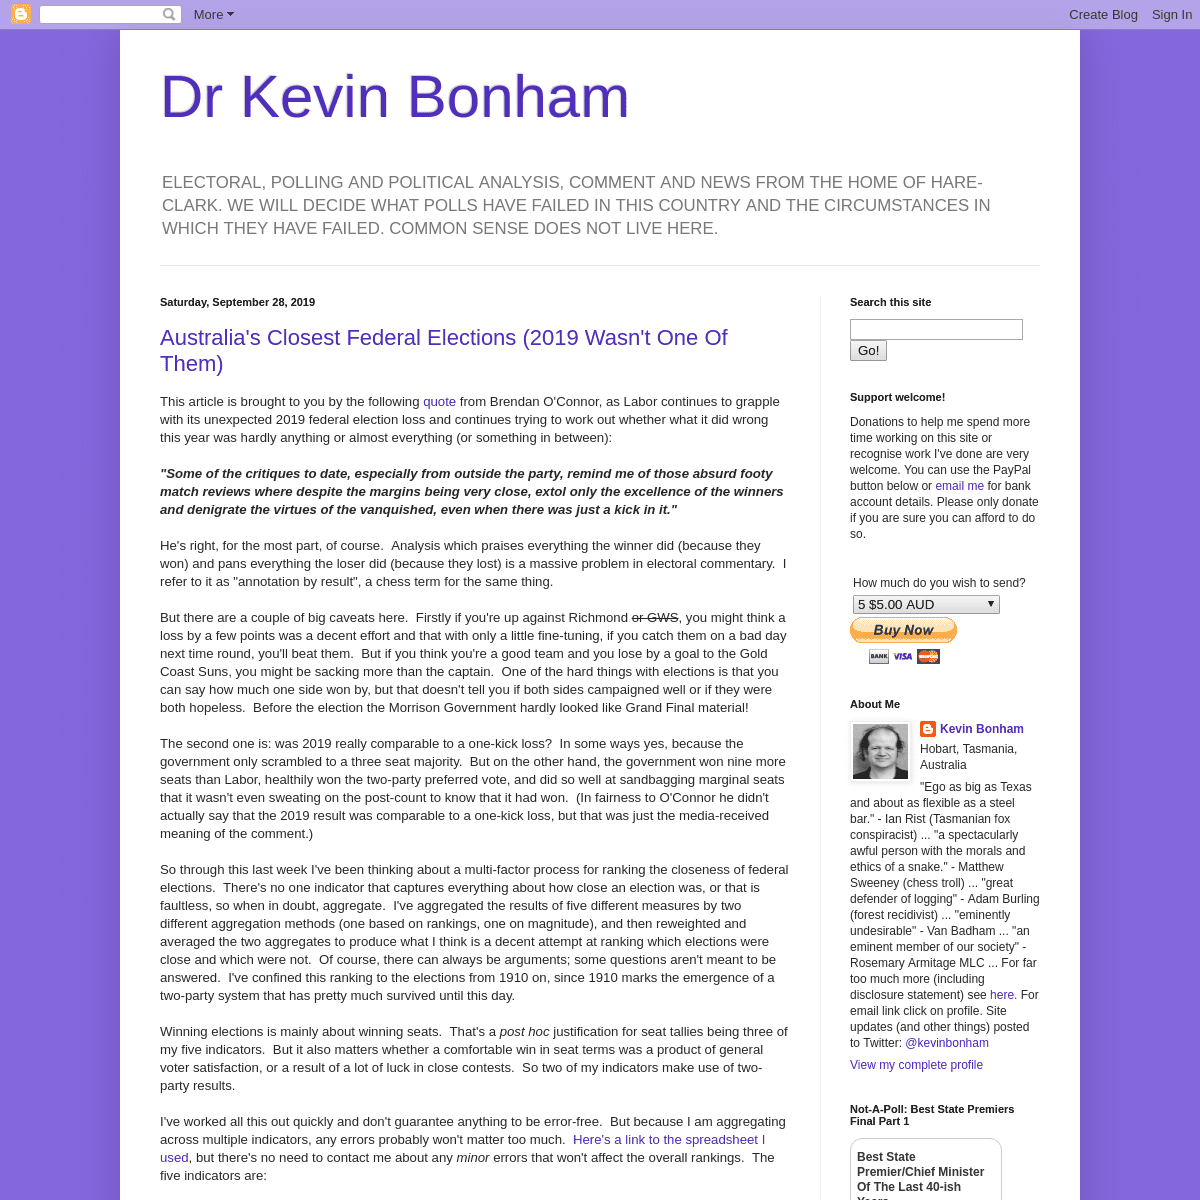 A complete backup of kevinbonham.blogspot.com